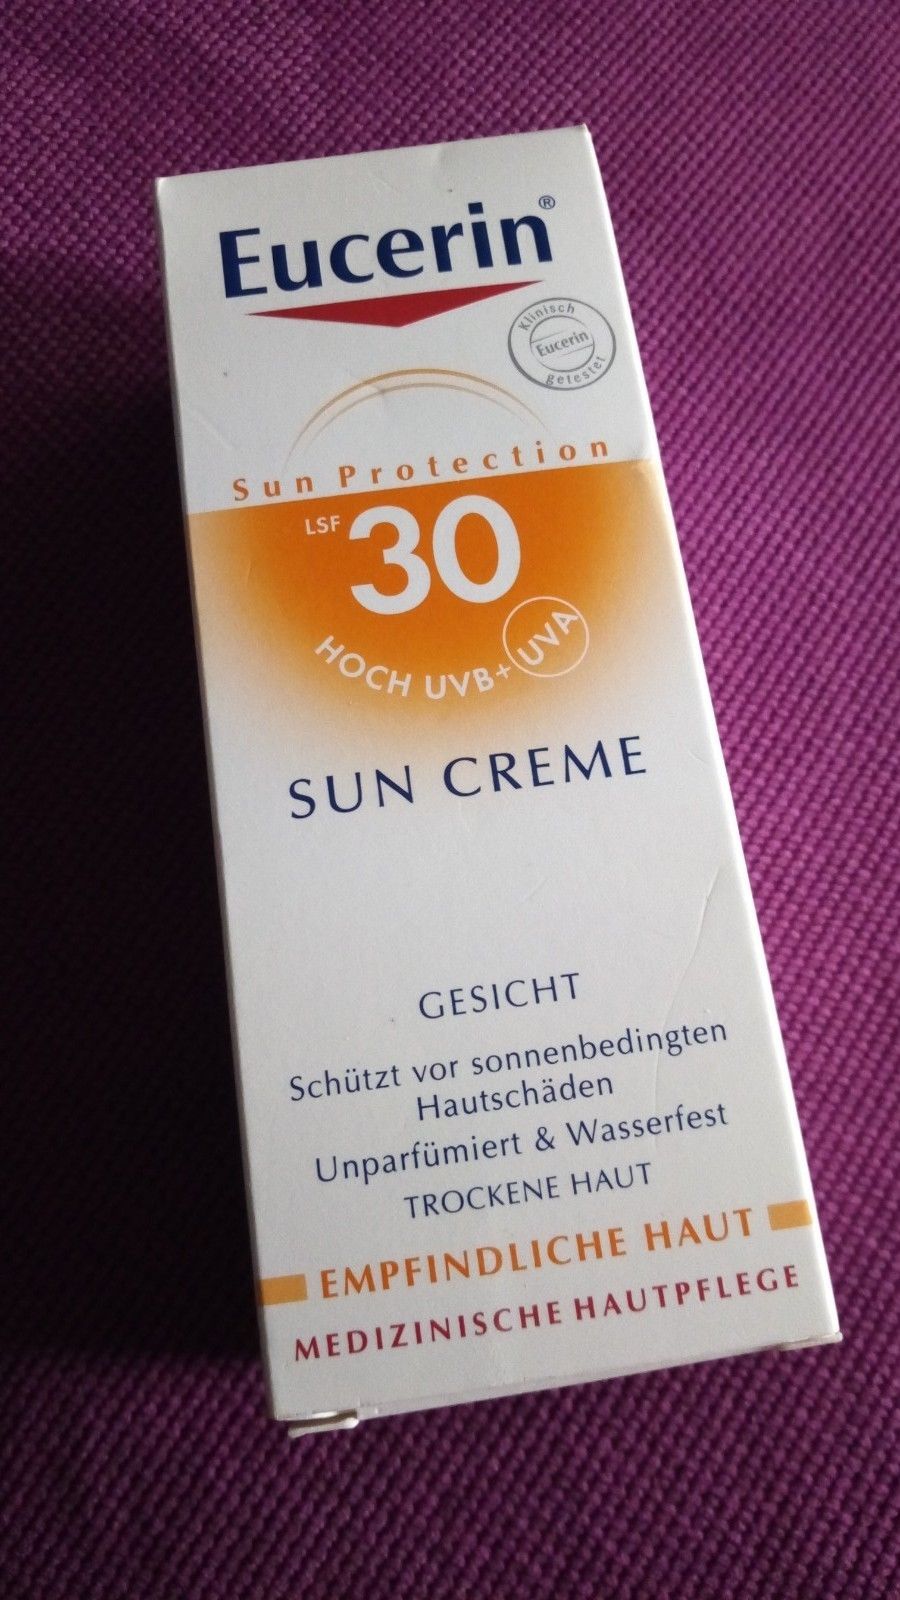 Eucerin Sun Creme For Face neck and decolte SPF30 50ml - $23.27